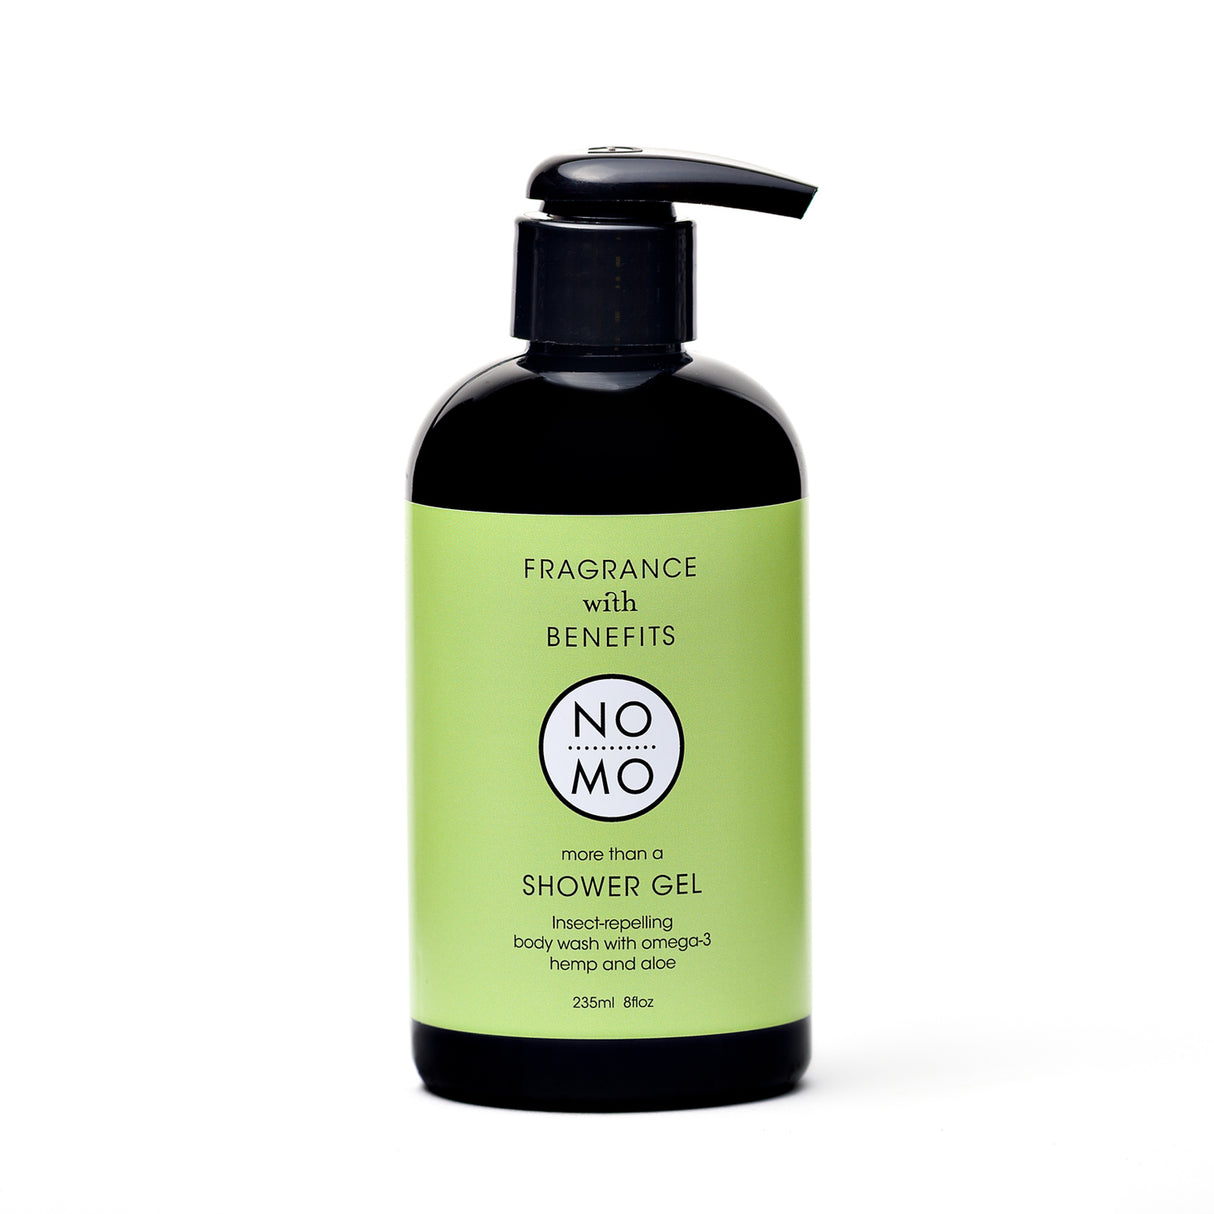 NoMo Shower Gel - insect-repellent